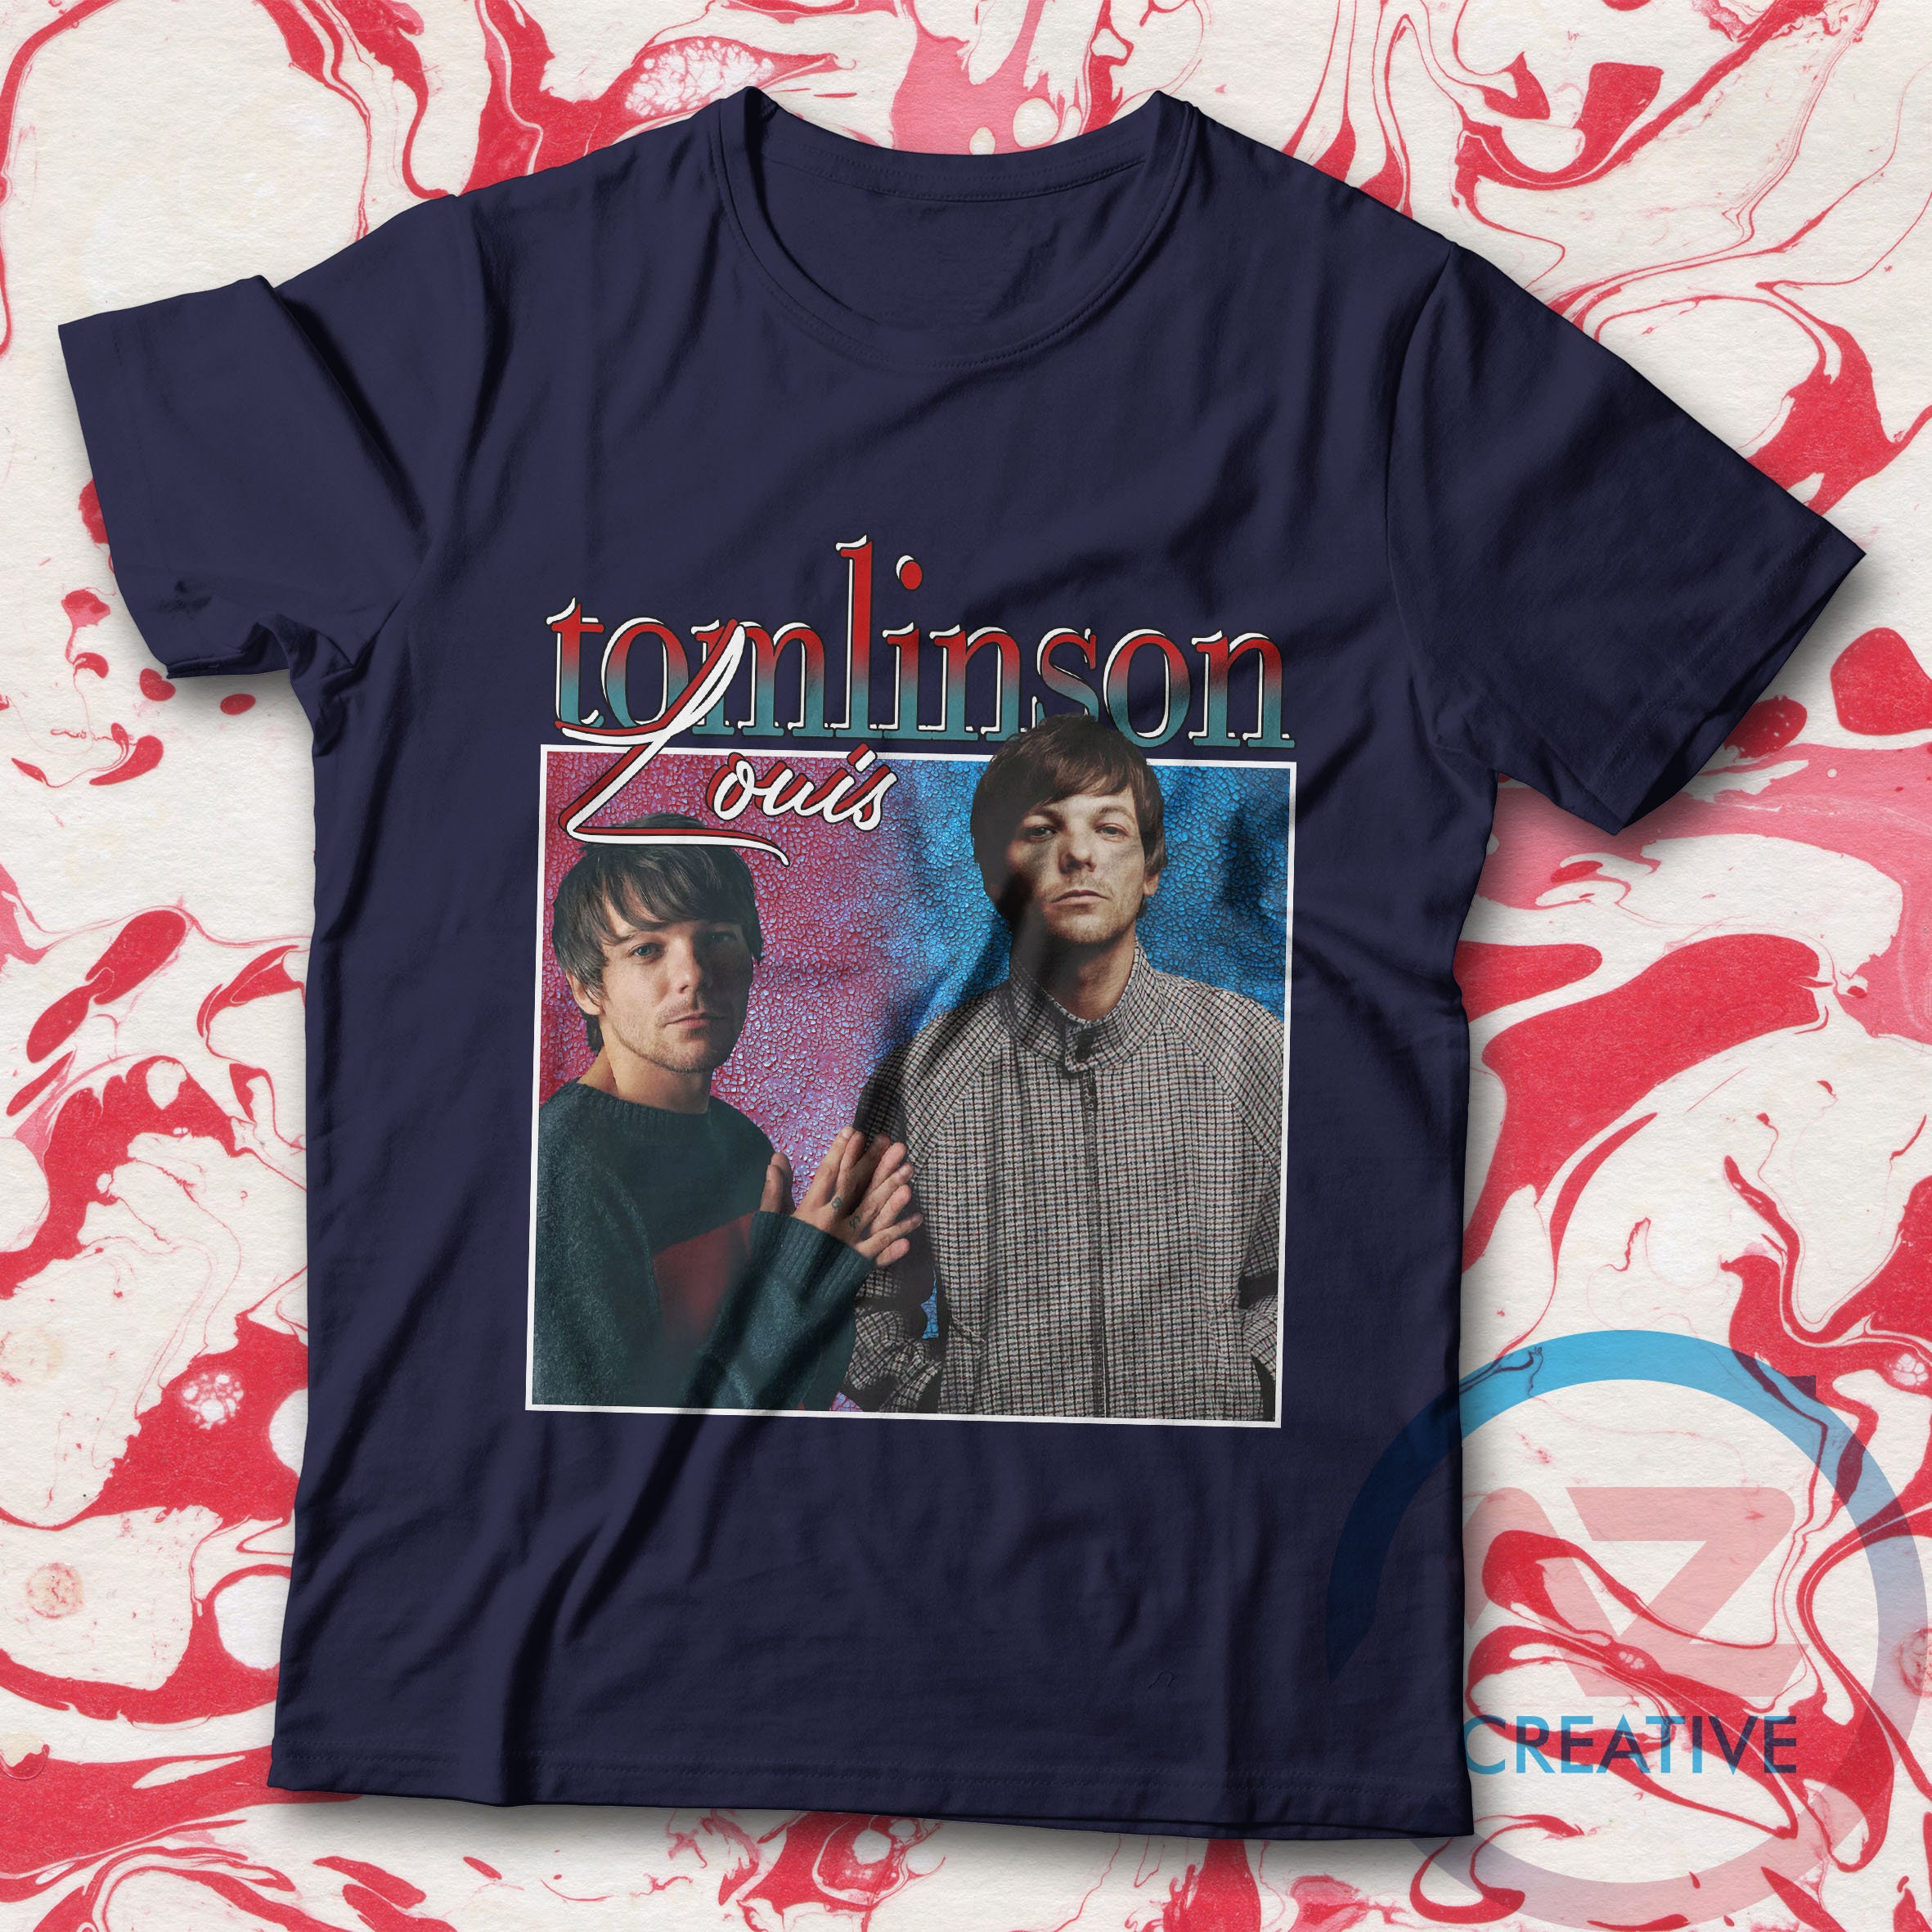 Louis Tomlinson World Tour 20XXIII Vintage Comfort Colors Shirt - Printing  Ooze